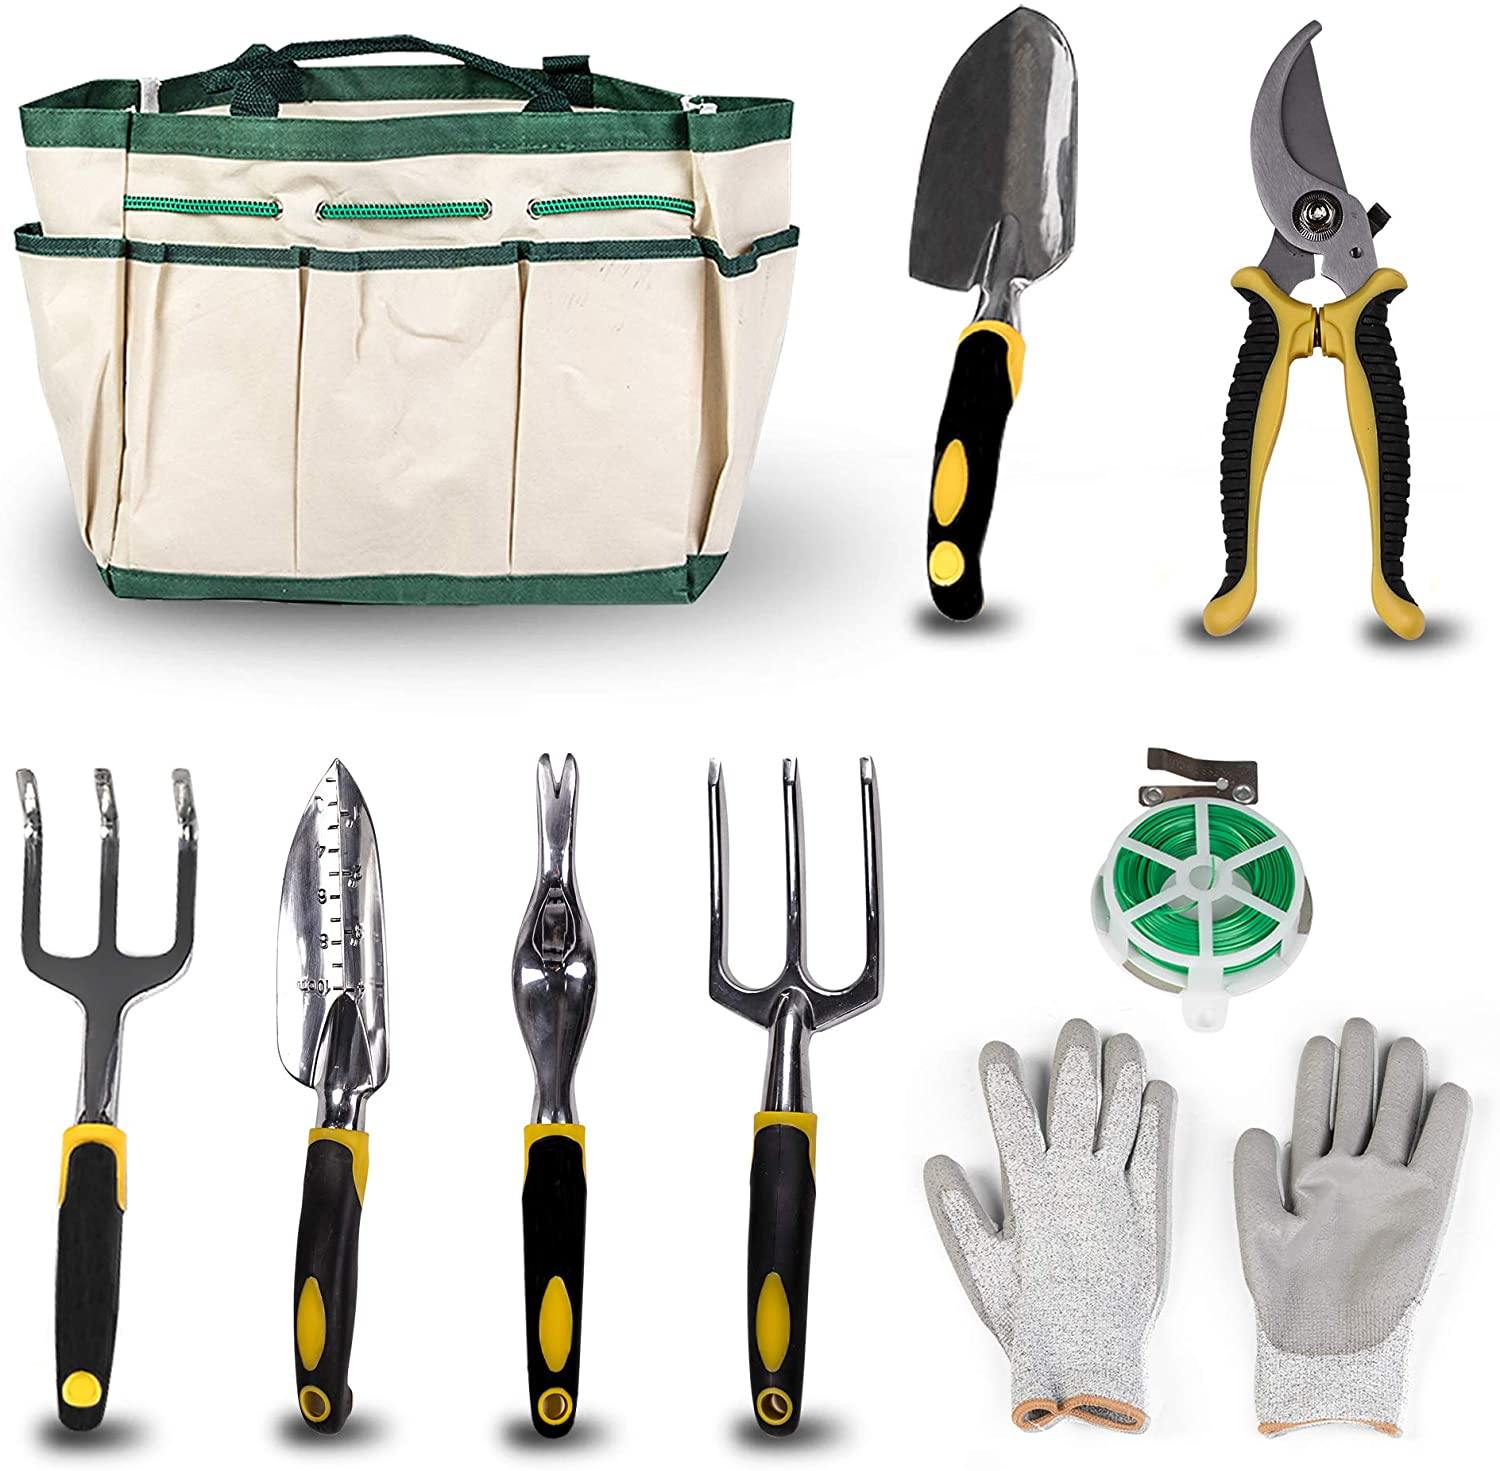 (Out of Stock) Garden Tool Set 9 Piece Manual Gardening Gifts Kit